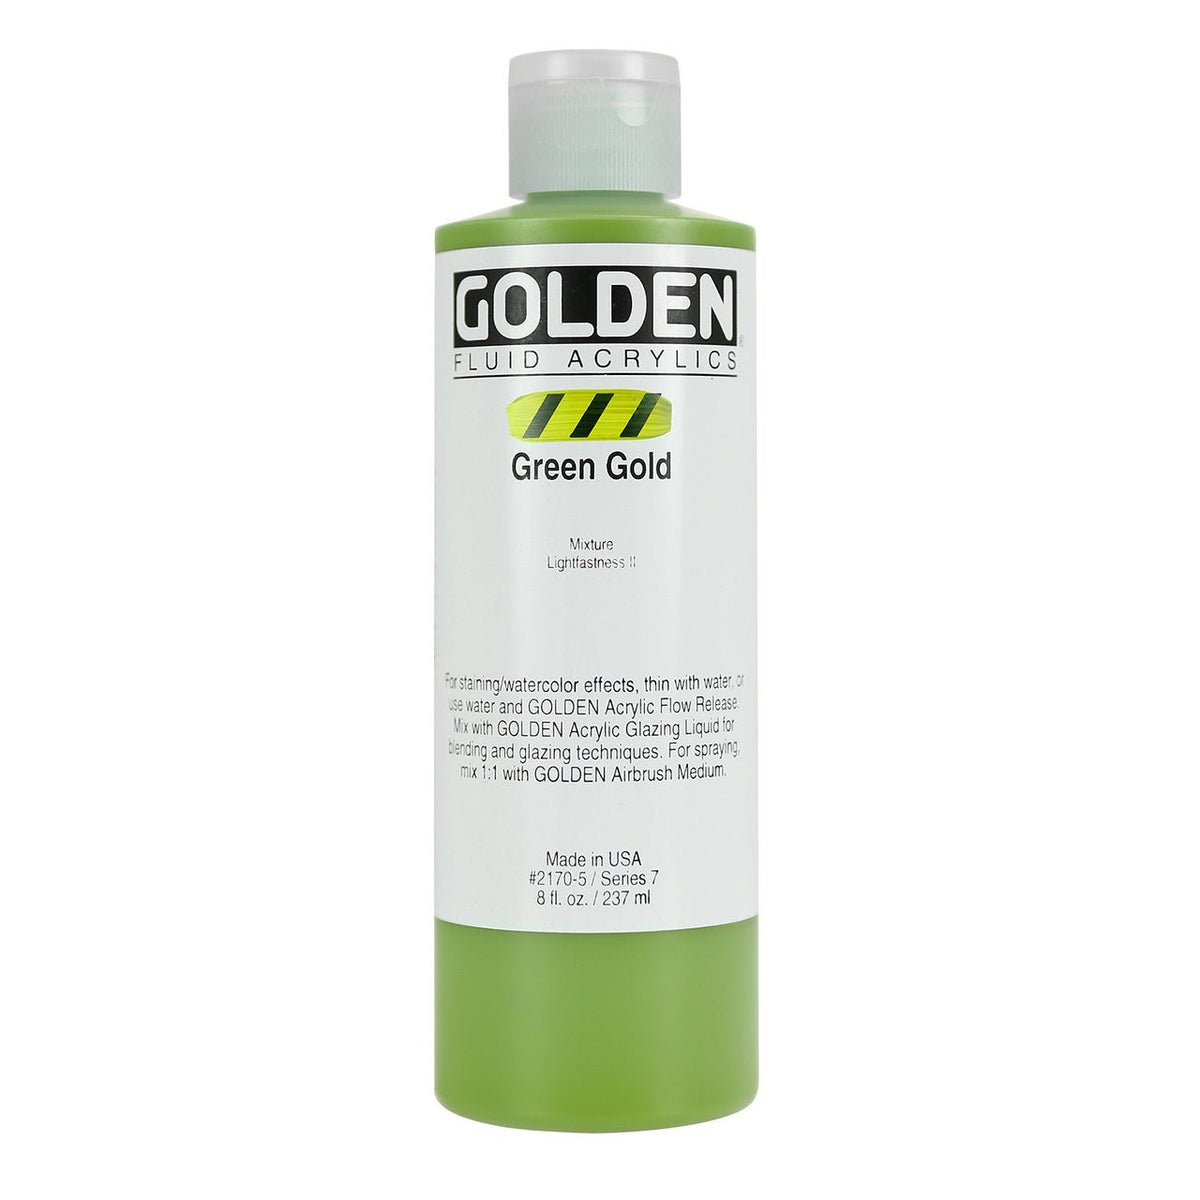 Golden Fluid Acrylic Green Gold 8 oz - merriartist.com